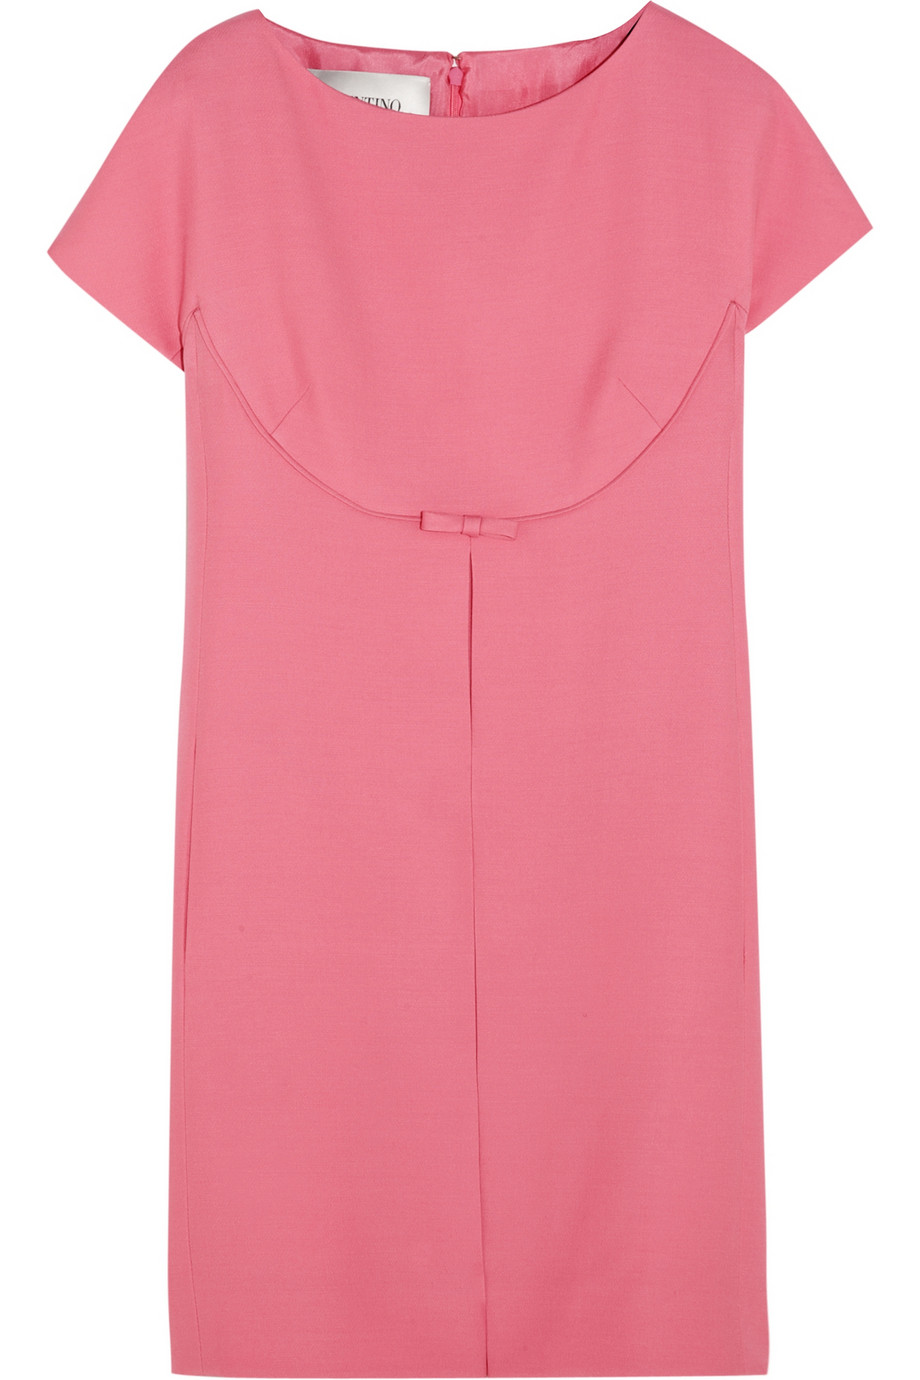 Lyst - Valentino Wool and Silk Blend Mini Dress in Pink